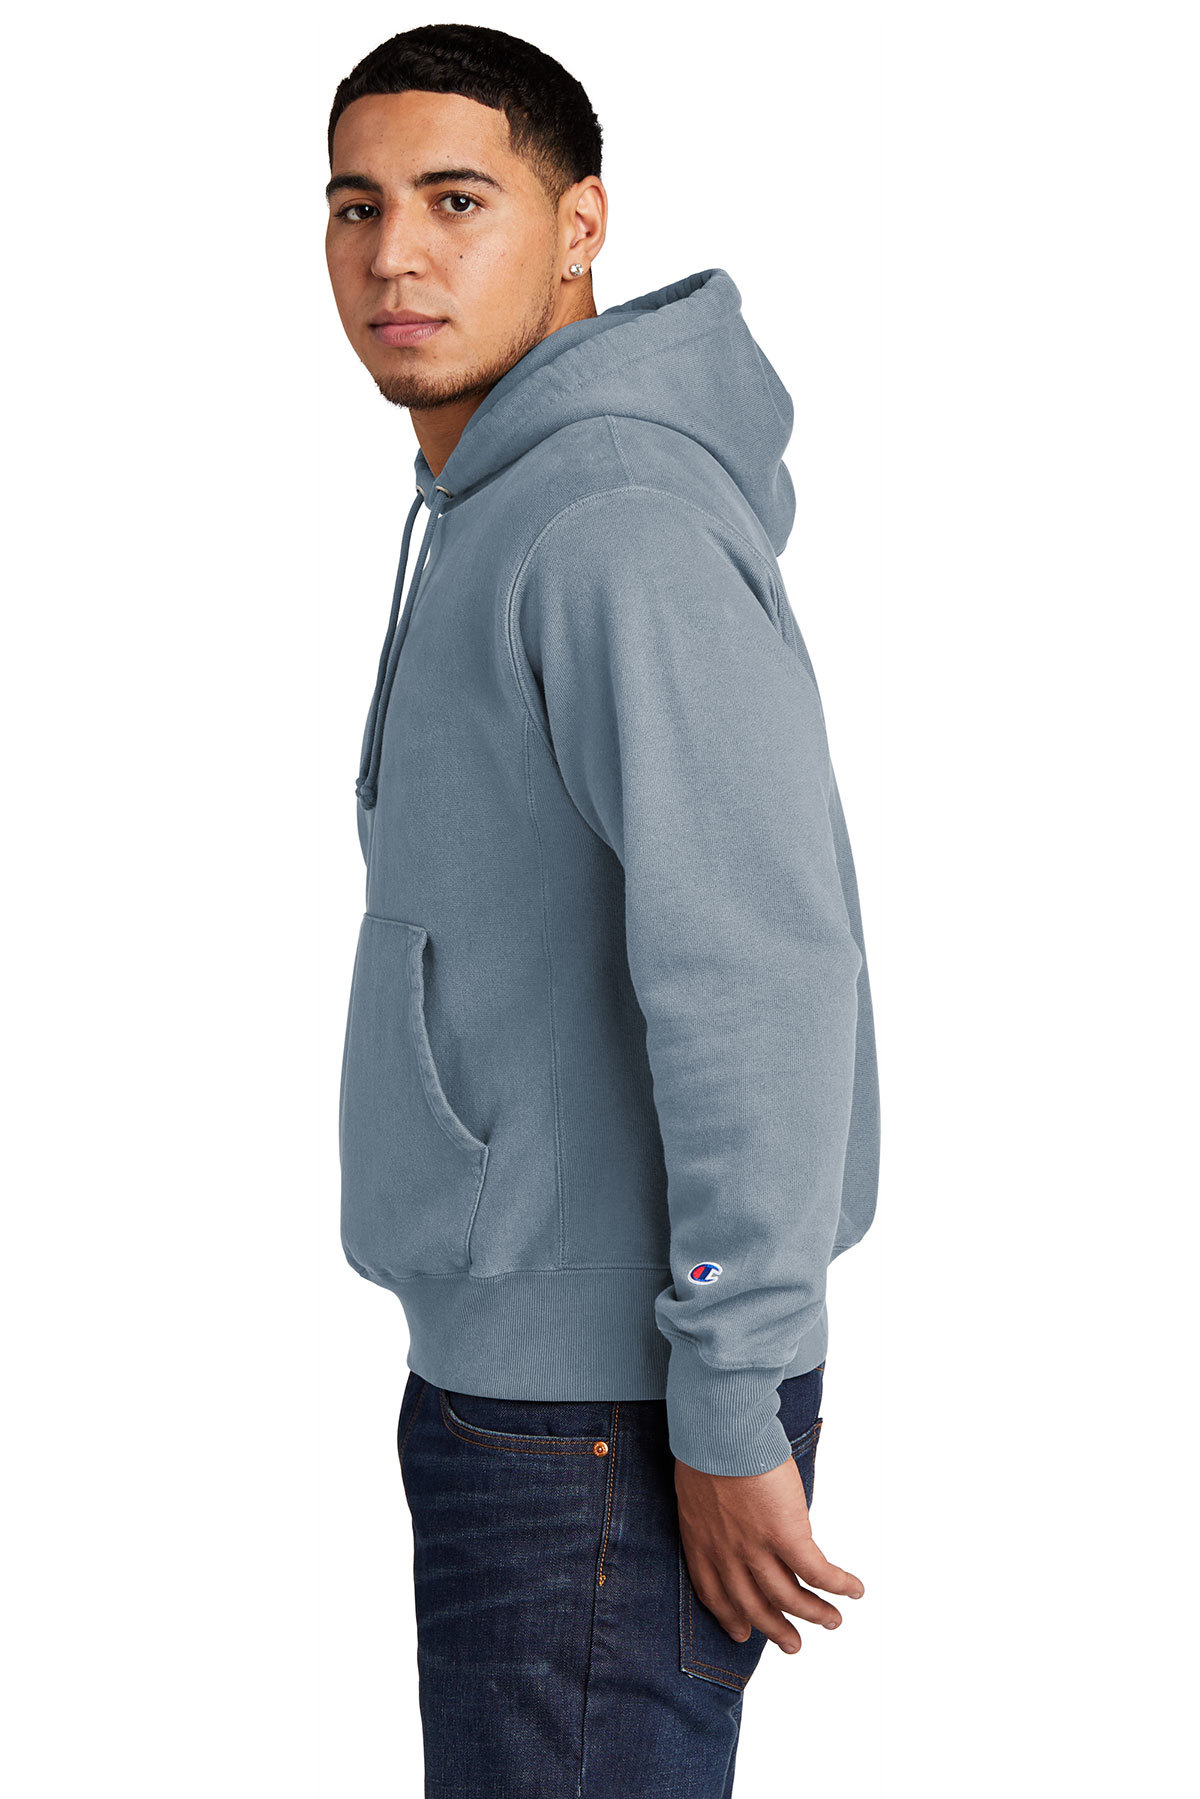 Reverse Champion Product | Hooded SanMar | Sweatshirt Weave Garment-Dyed